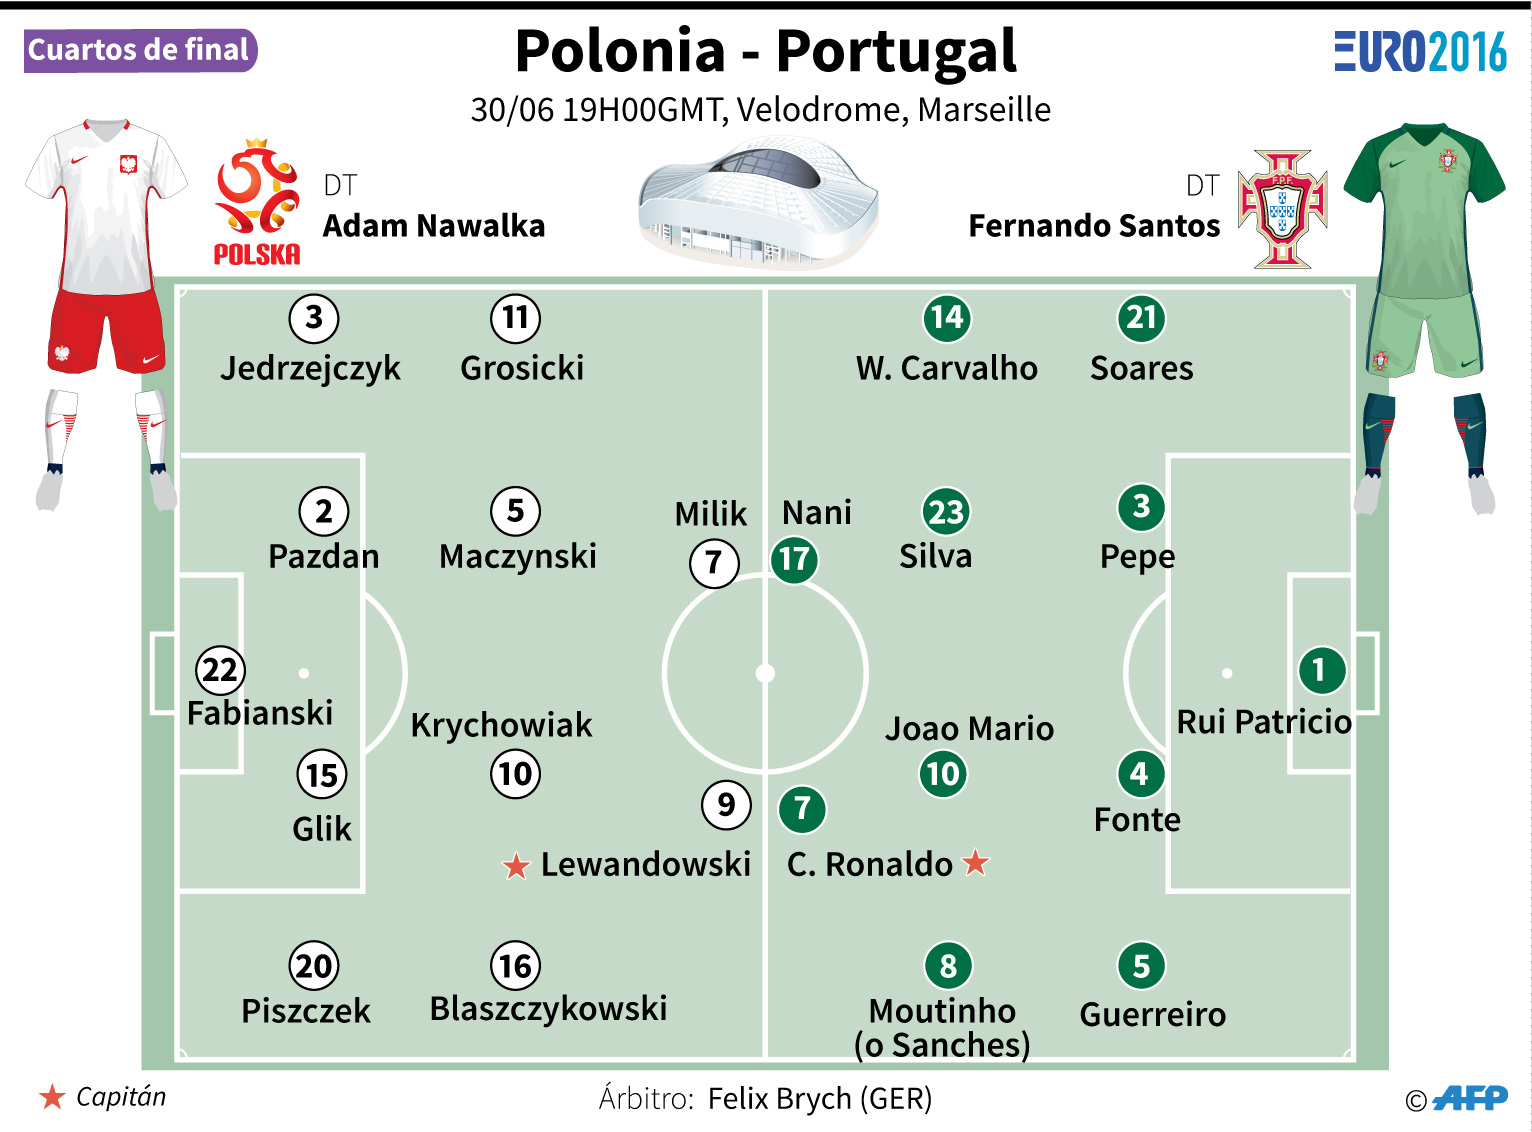 Portugal vs. Polonia en vivo cuartos de final Eurocopa 2016